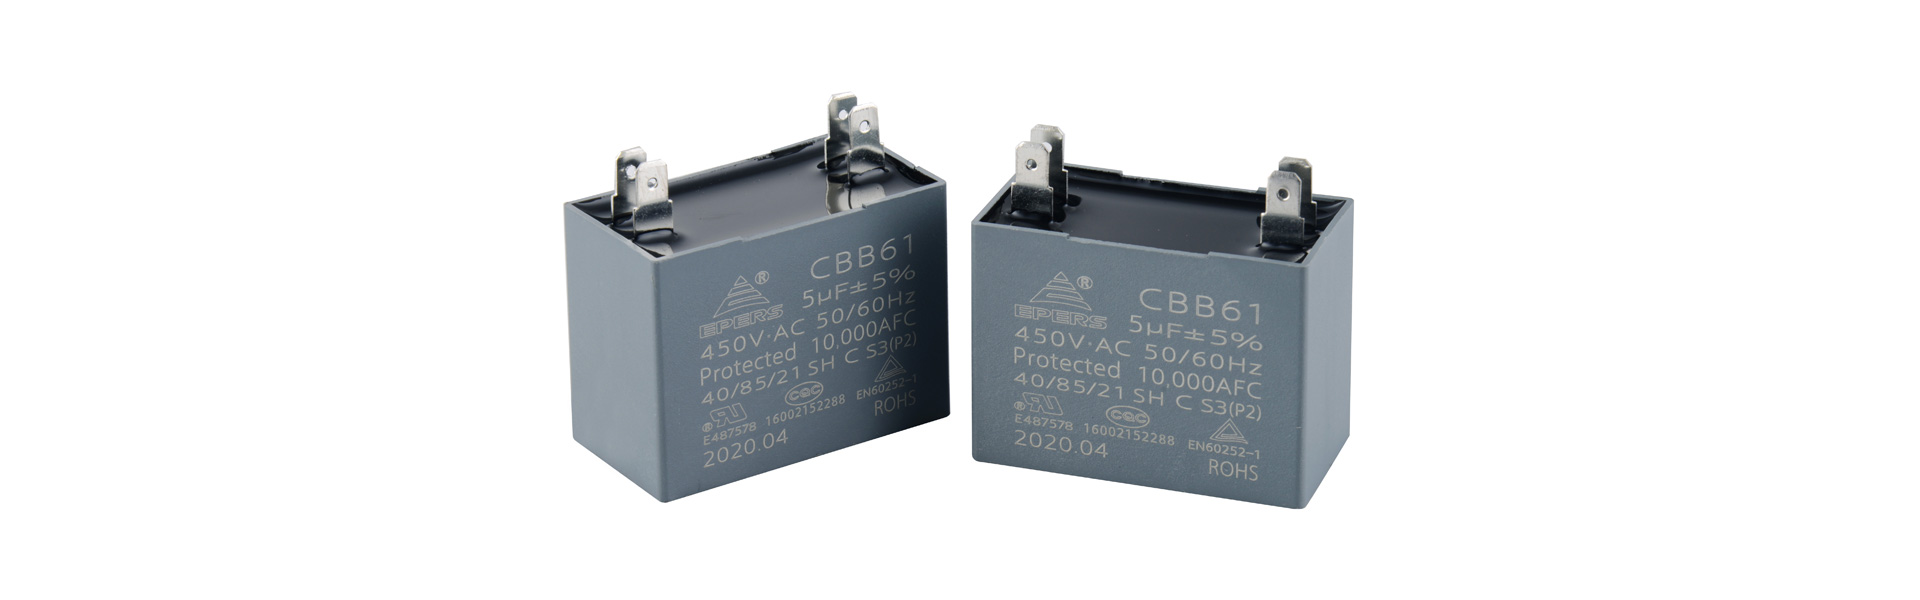 jádro kondenzátoru,metalizovaný film,cbb61,Zhongshan Epers Electrical Appliances Co.,Ltd.